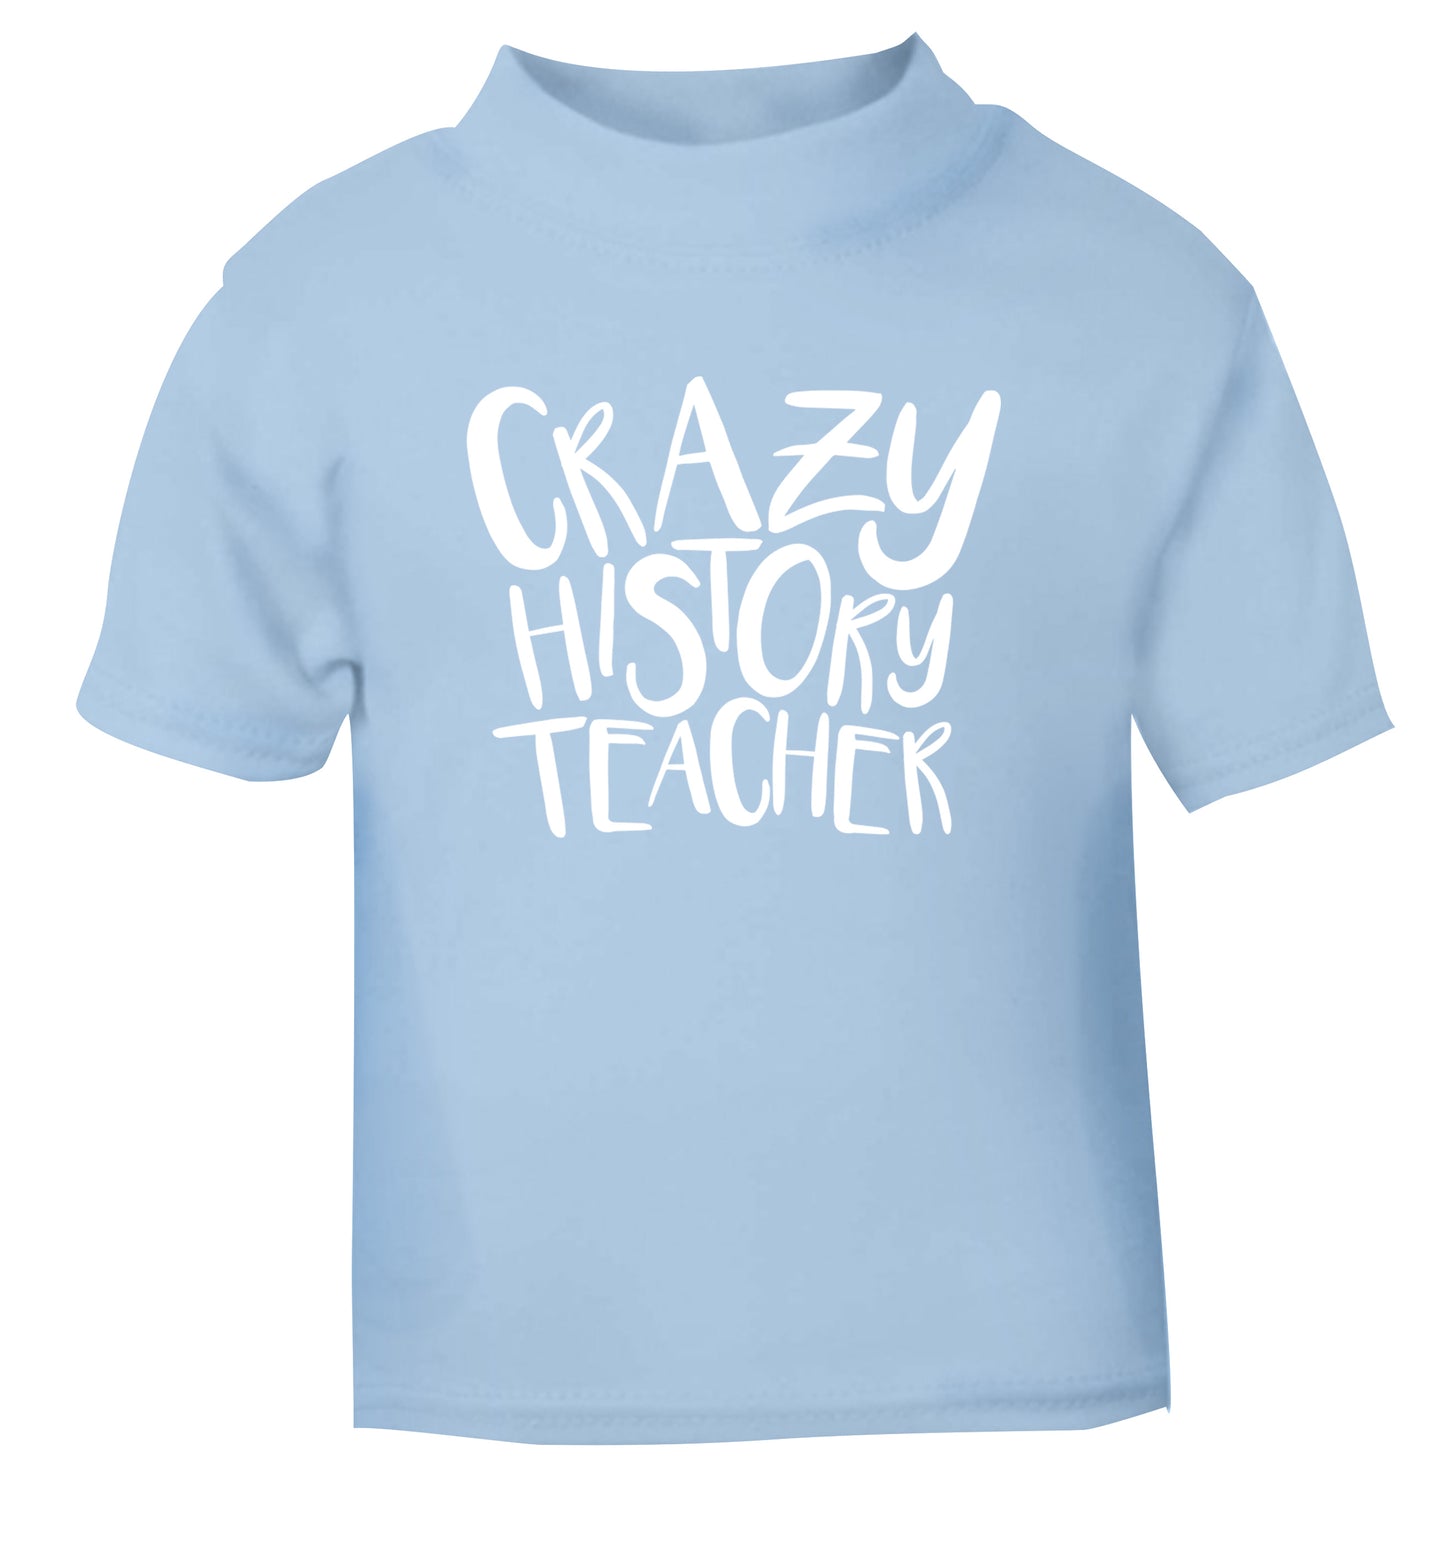 Crazy history teacher light blue Baby Toddler Tshirt 2 Years